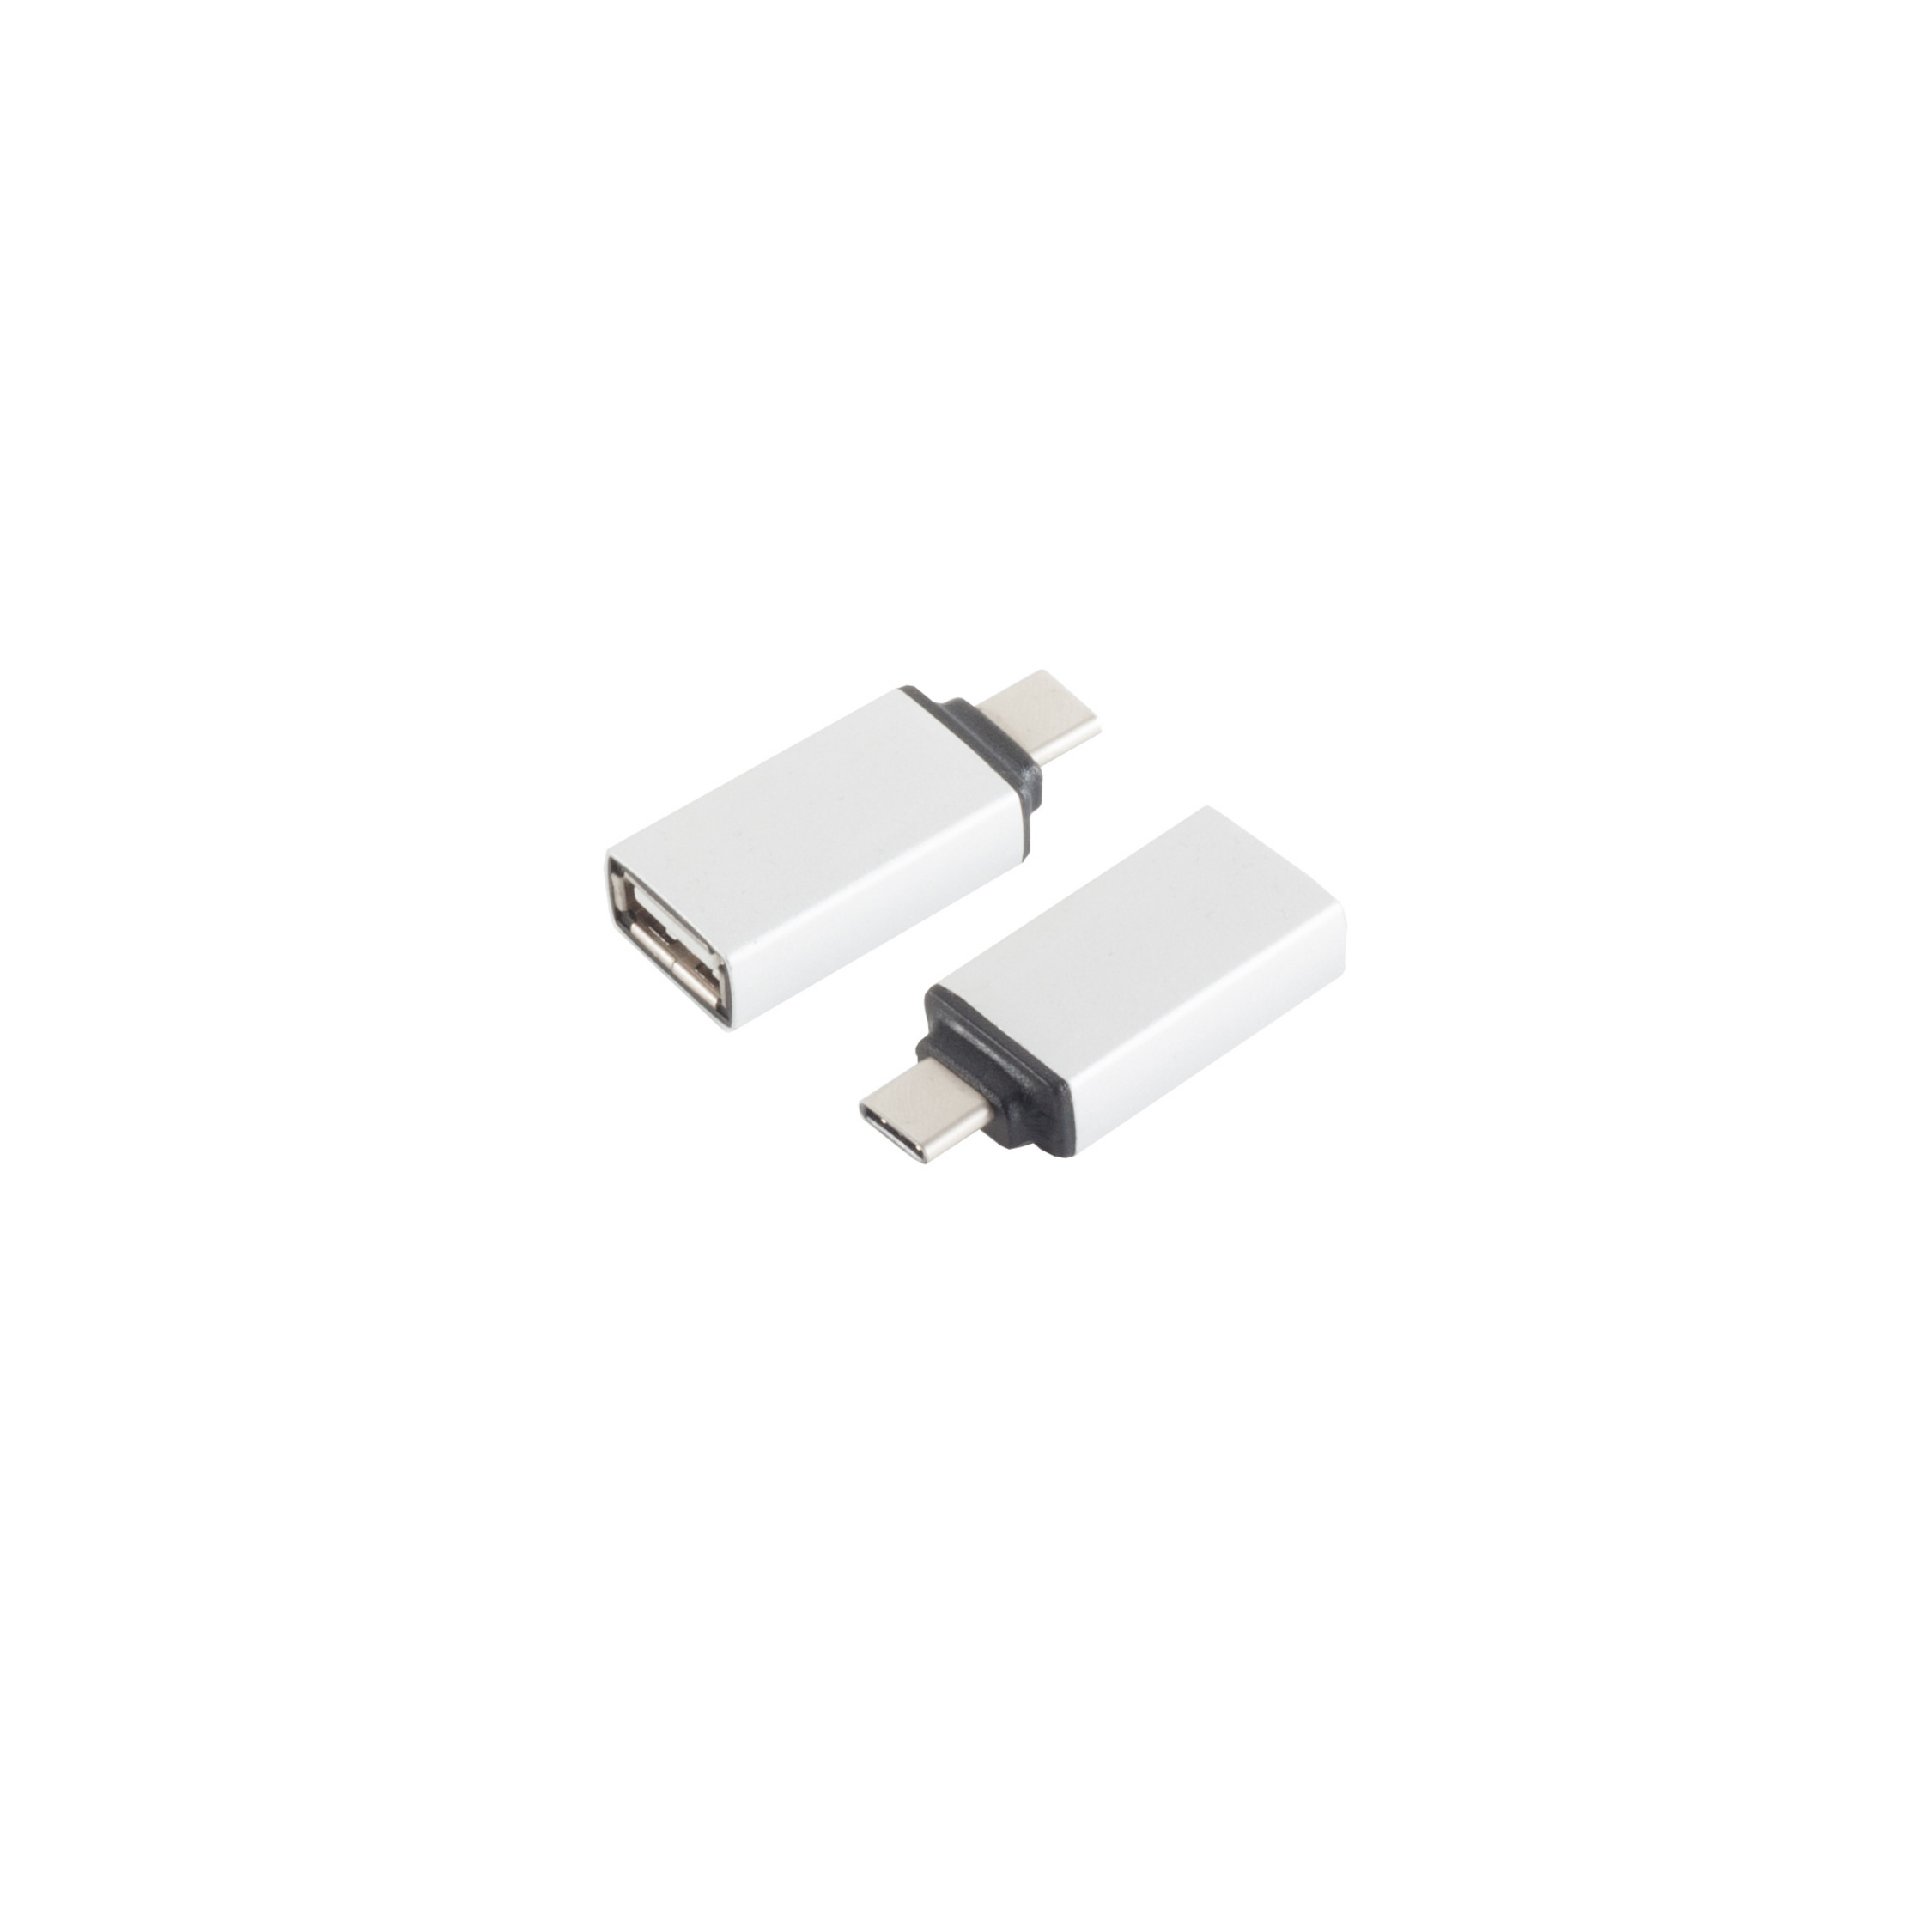 A Adapter CONNECTIVITY USB S/CONN 3.1 USB C Adapter, 2.0 MAXIMUM USB-C Stecker/ Buchse